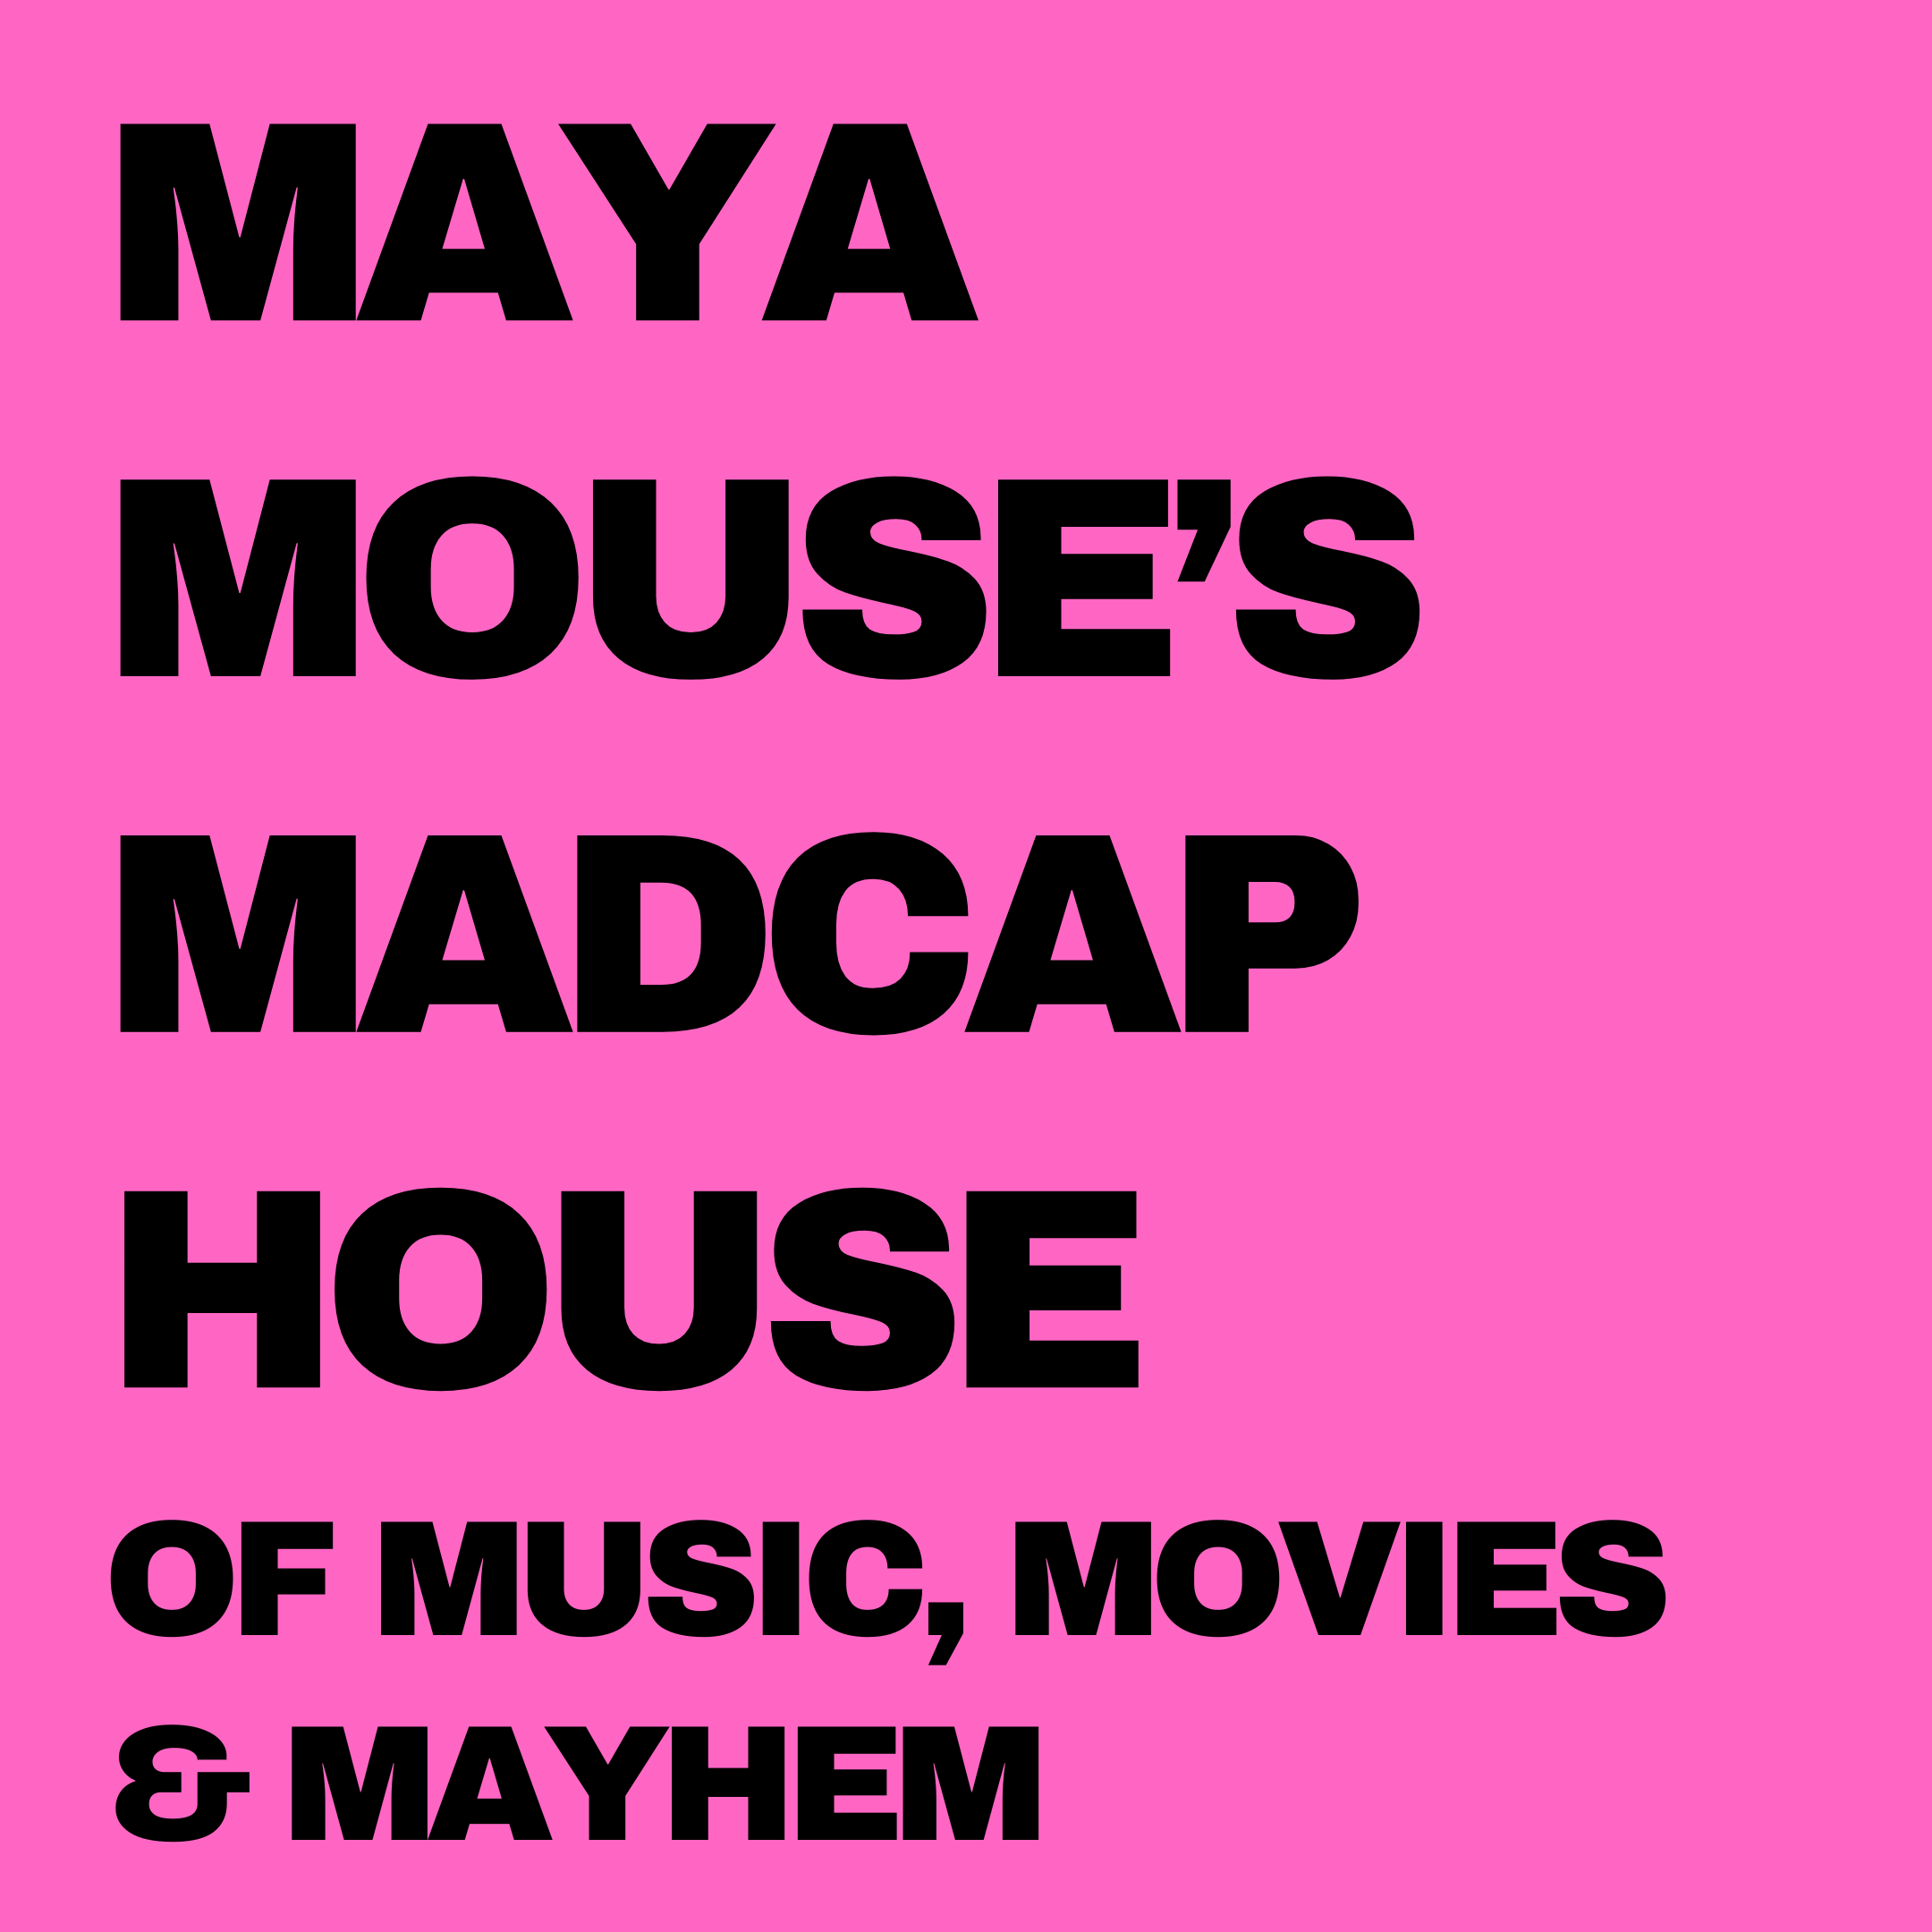 Maya Mouse’s Madcap House